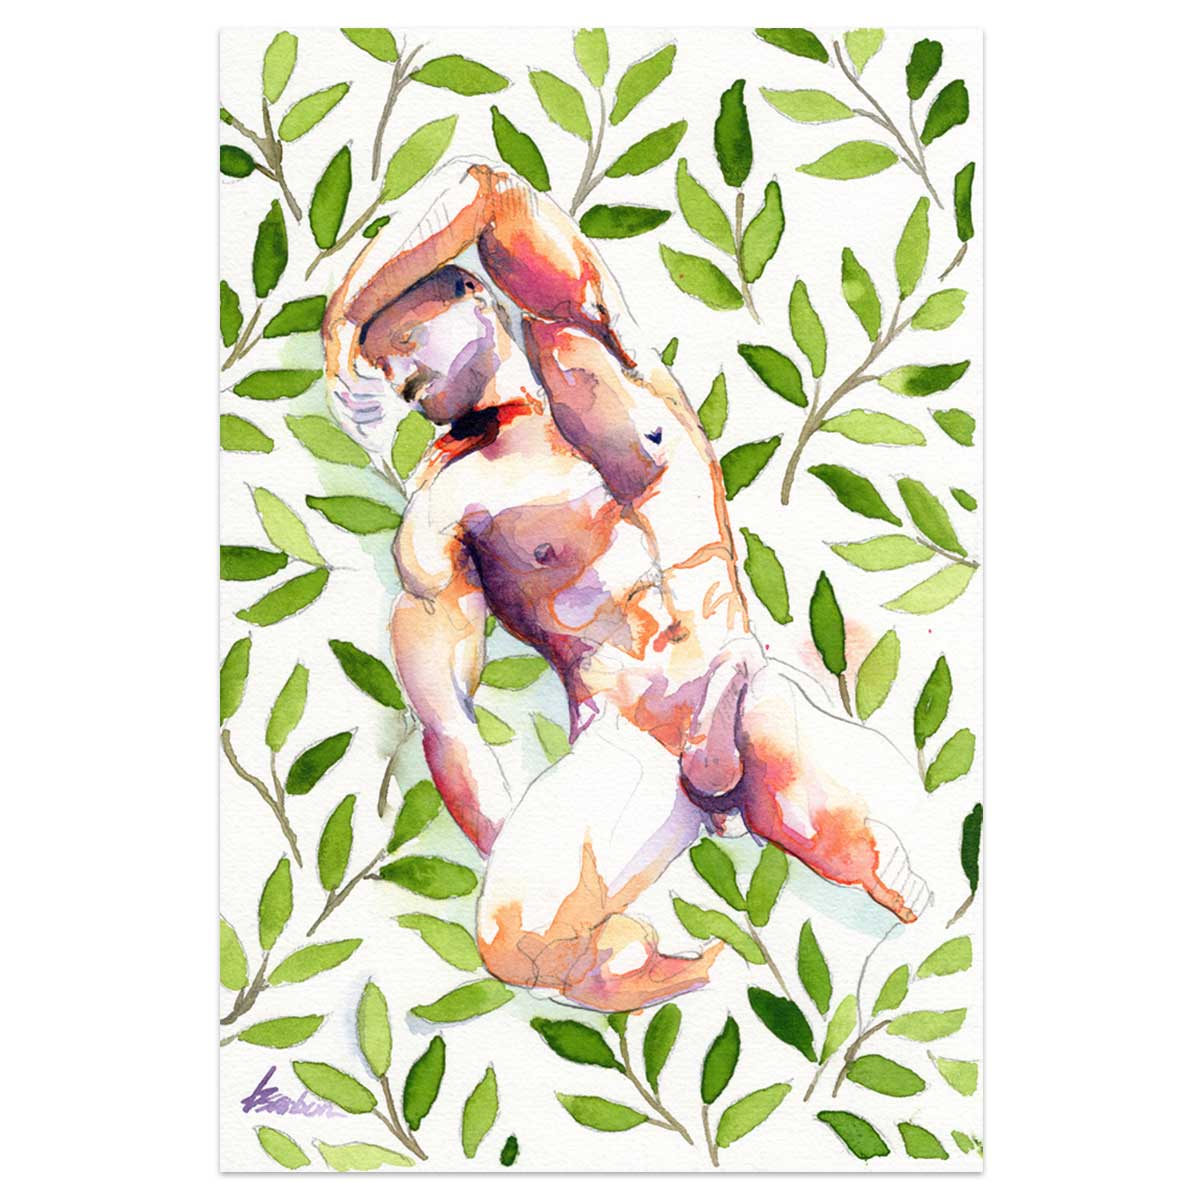 Nude Male Figure Amidst Lush Foliage - 6x9" Original Painting